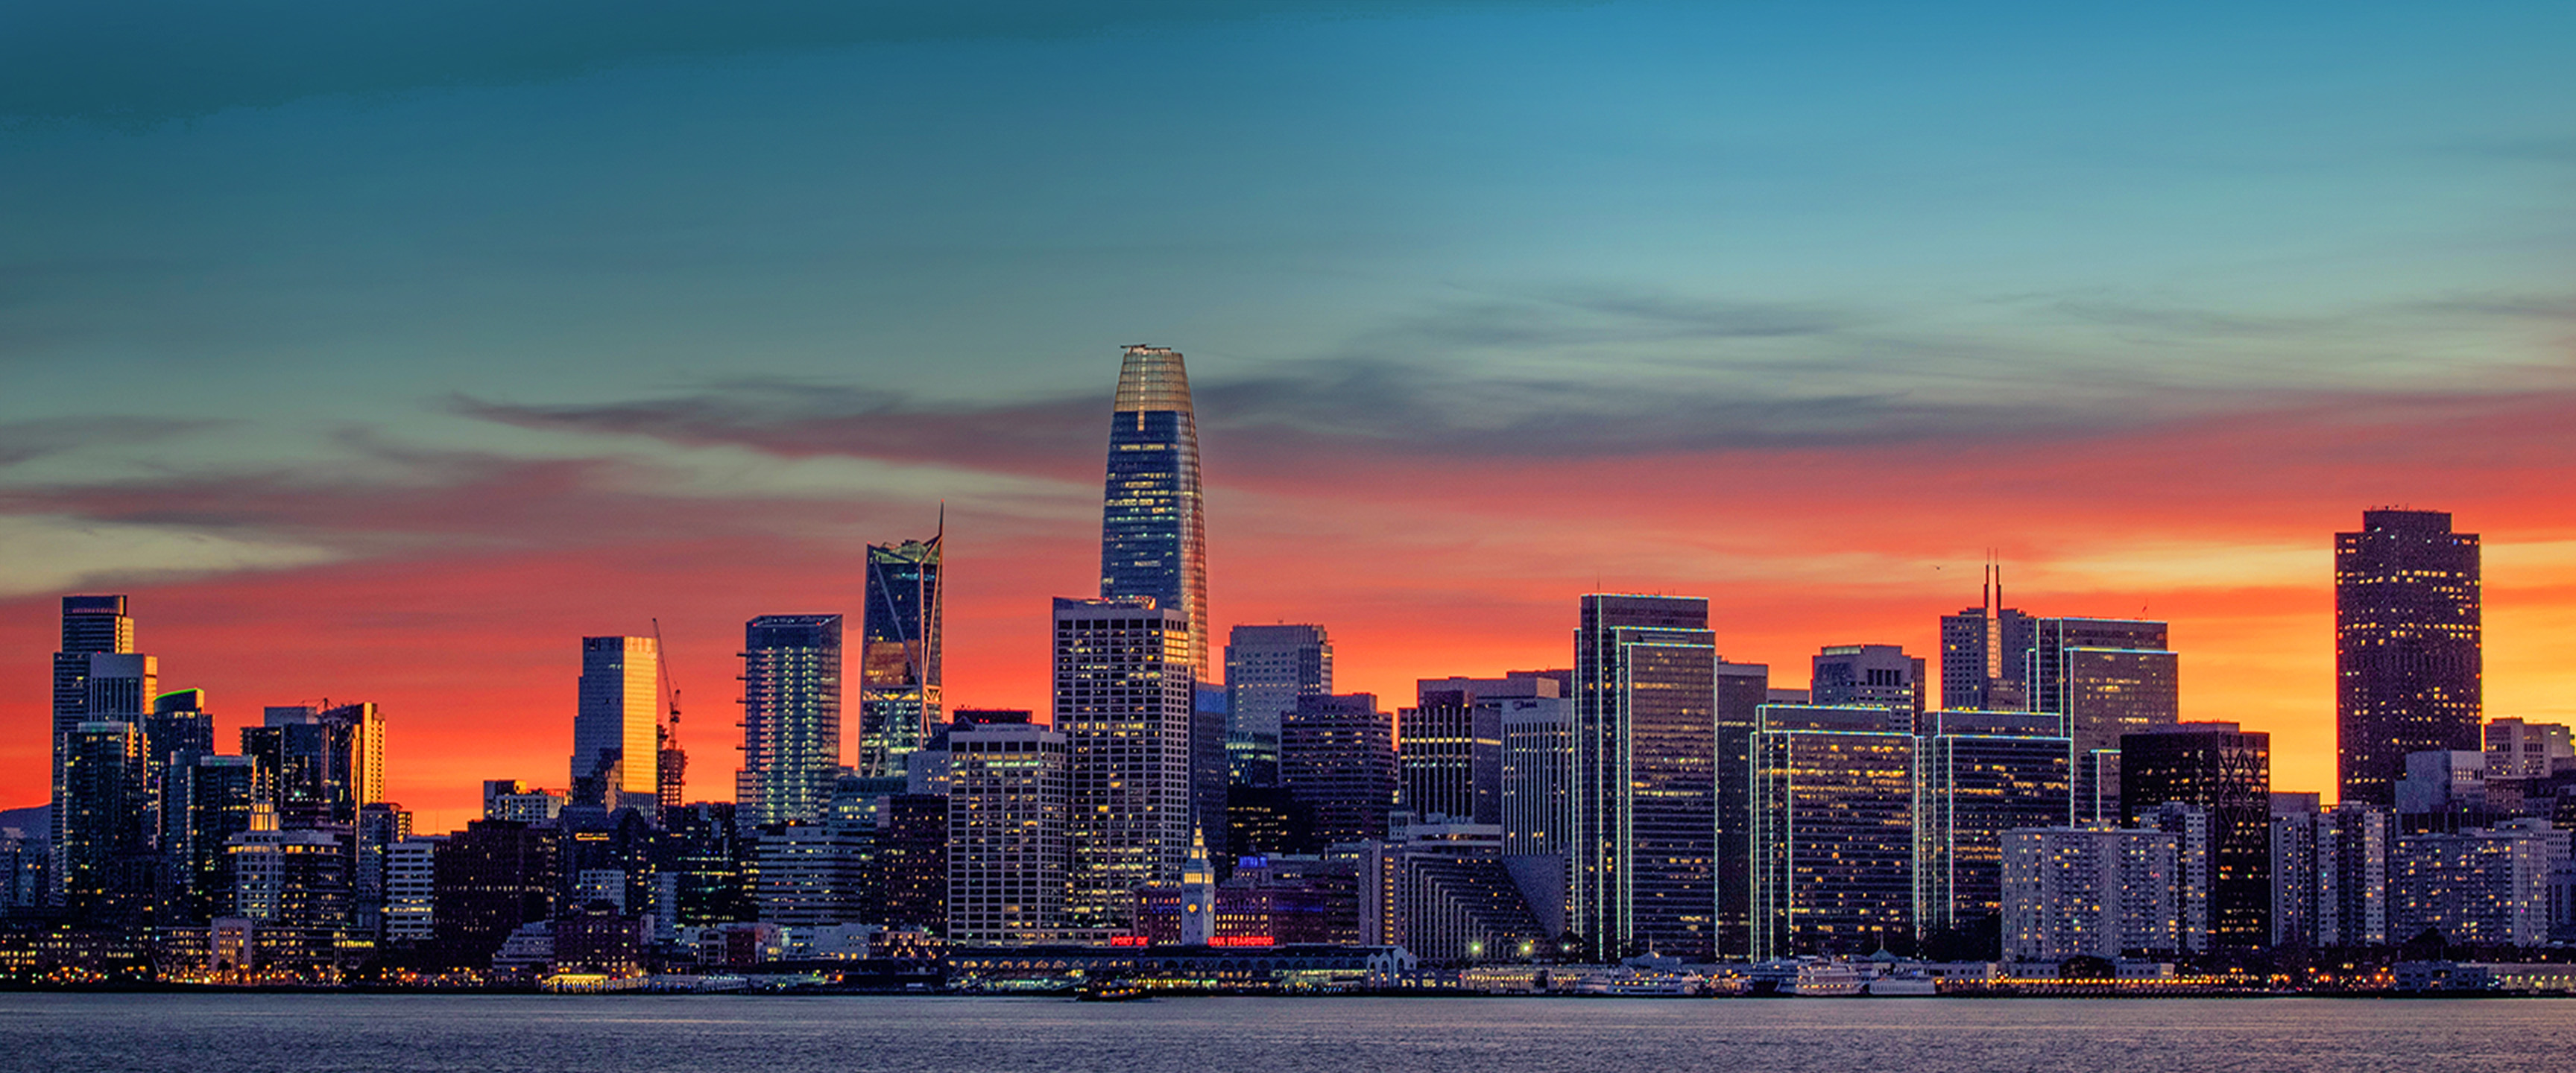 San Francisco sky line at night